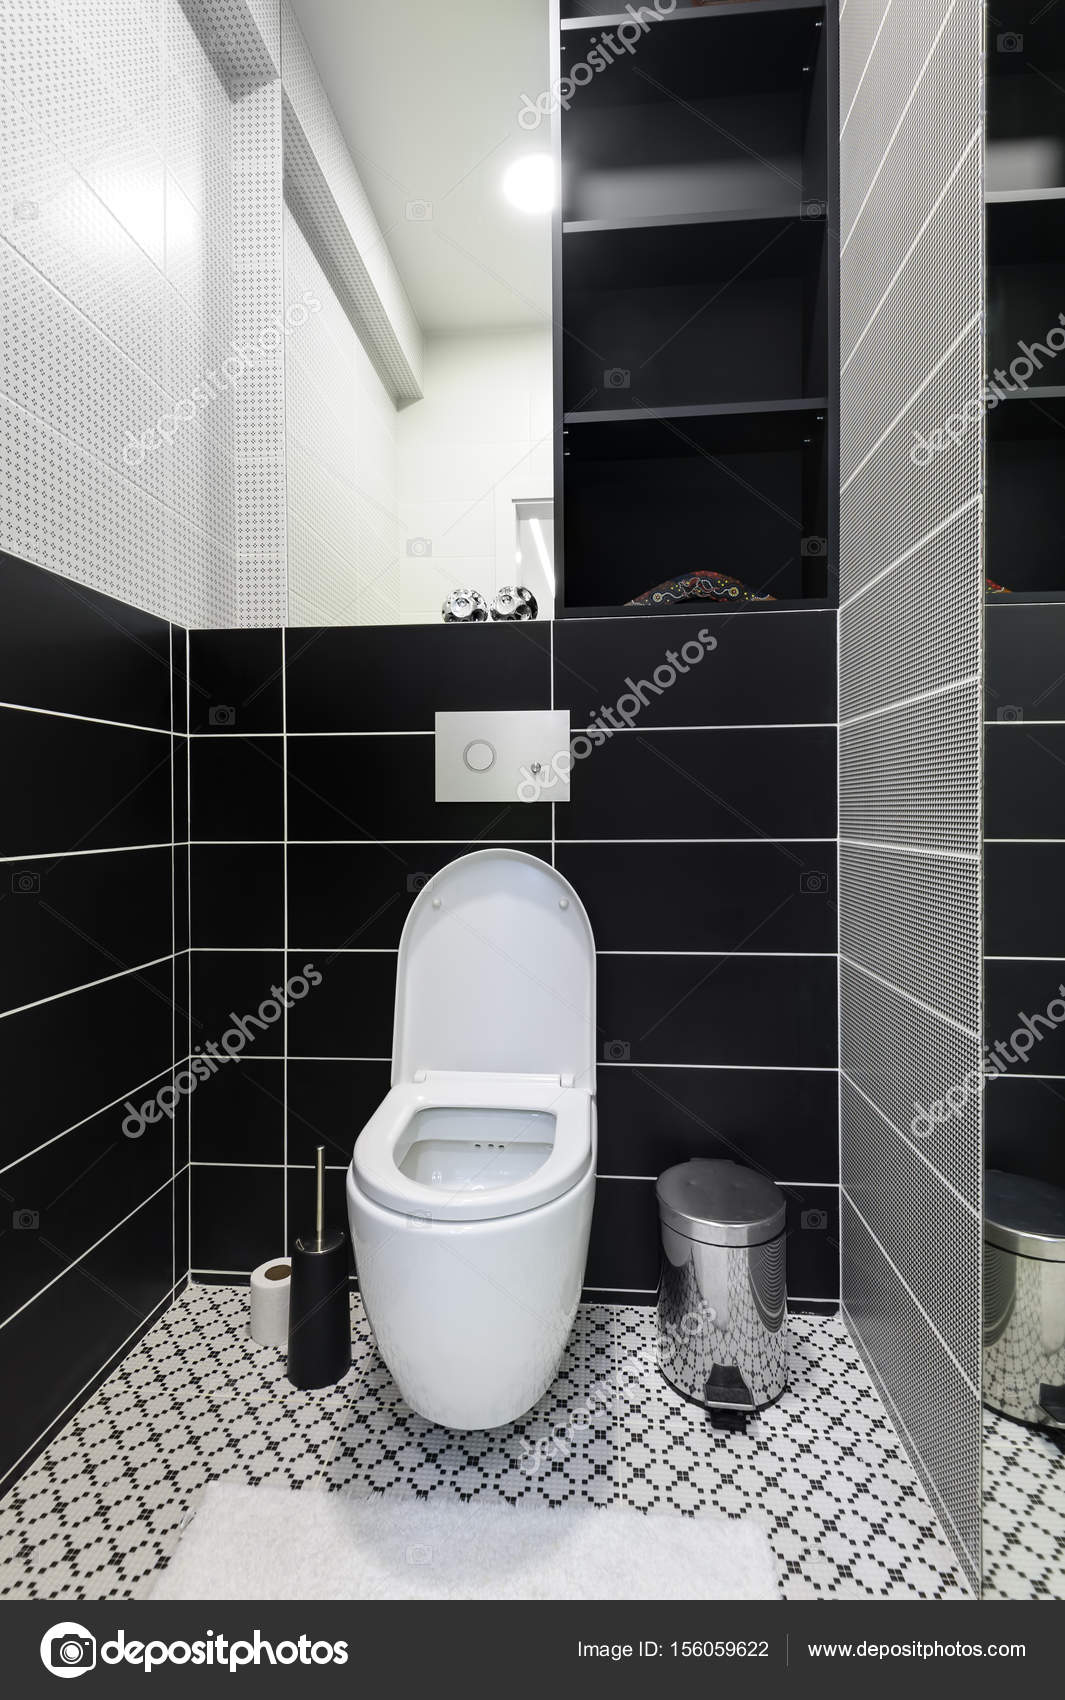 https://st3.depositphotos.com/1301843/15605/i/1600/depositphotos_156059622-stock-photo-modern-black-and-white-toilet.jpg